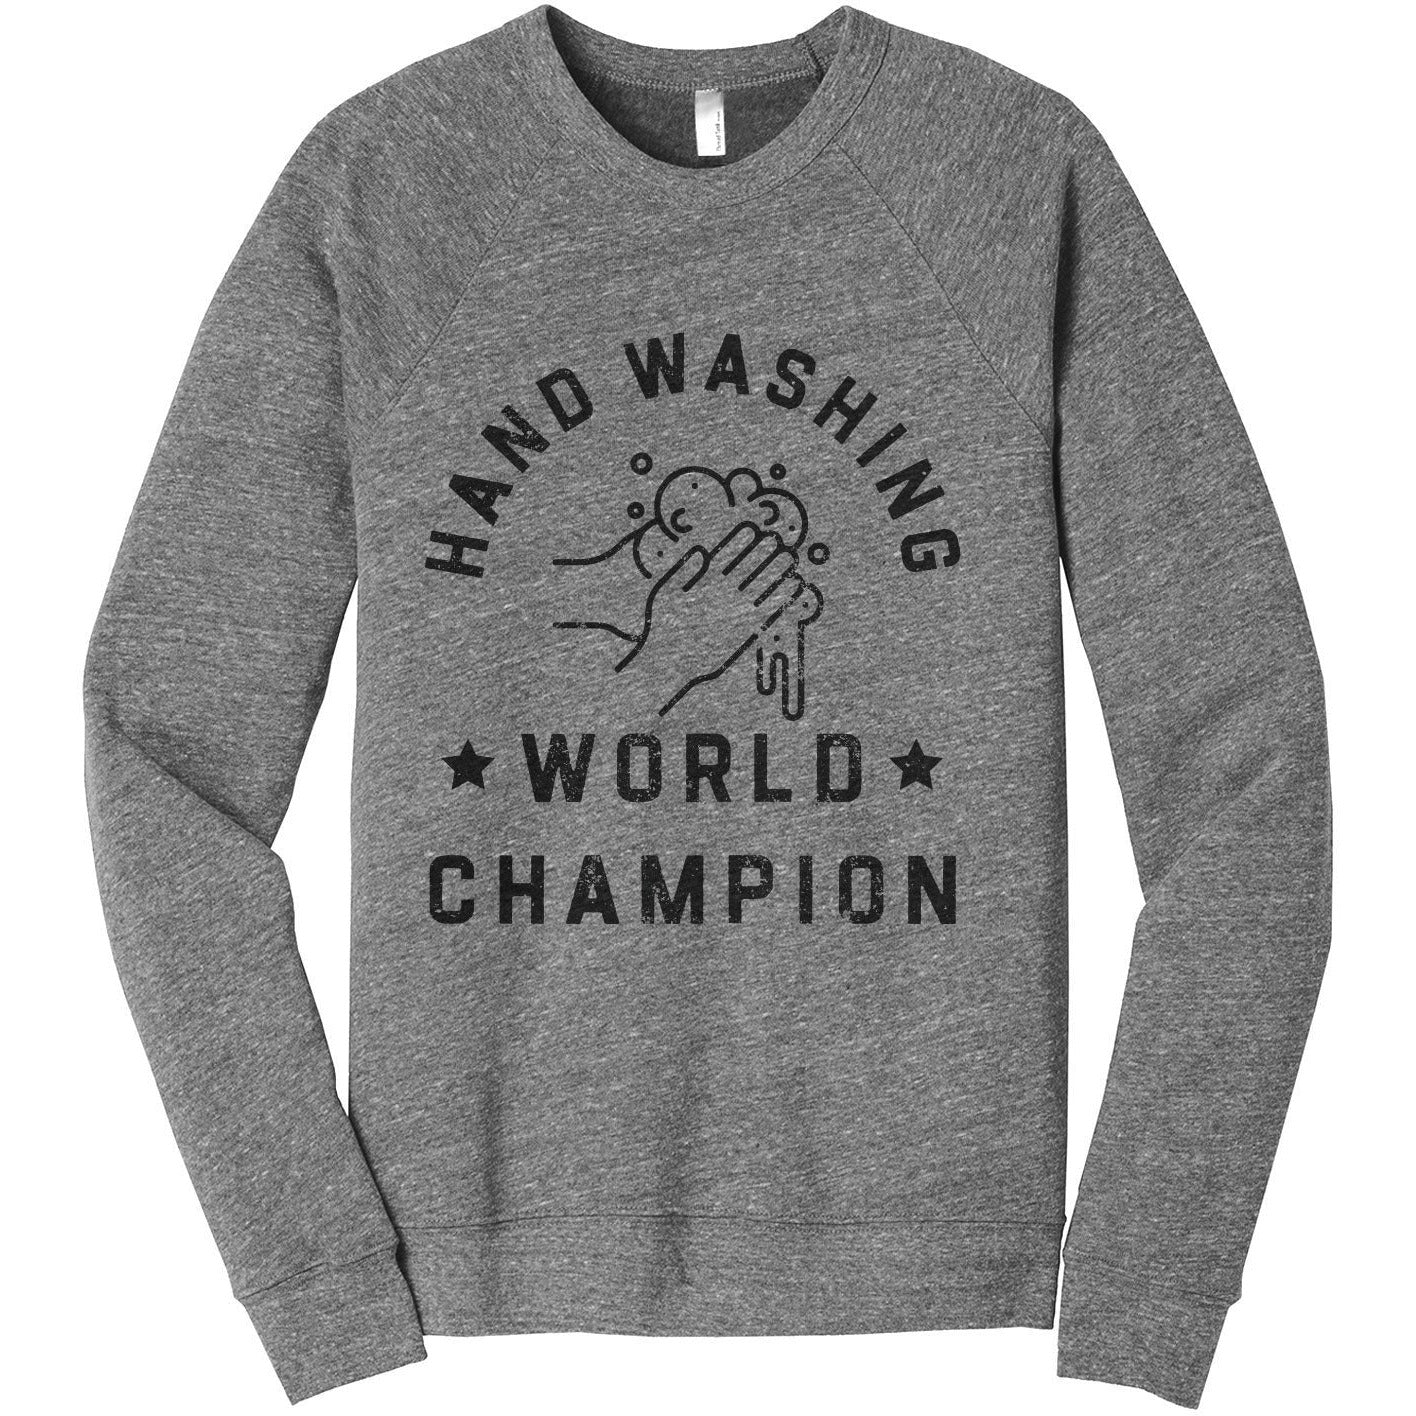 Hand Washing World Champion Women's Cozy Fleece Longsleeves Sweater Rouge Closeup Details